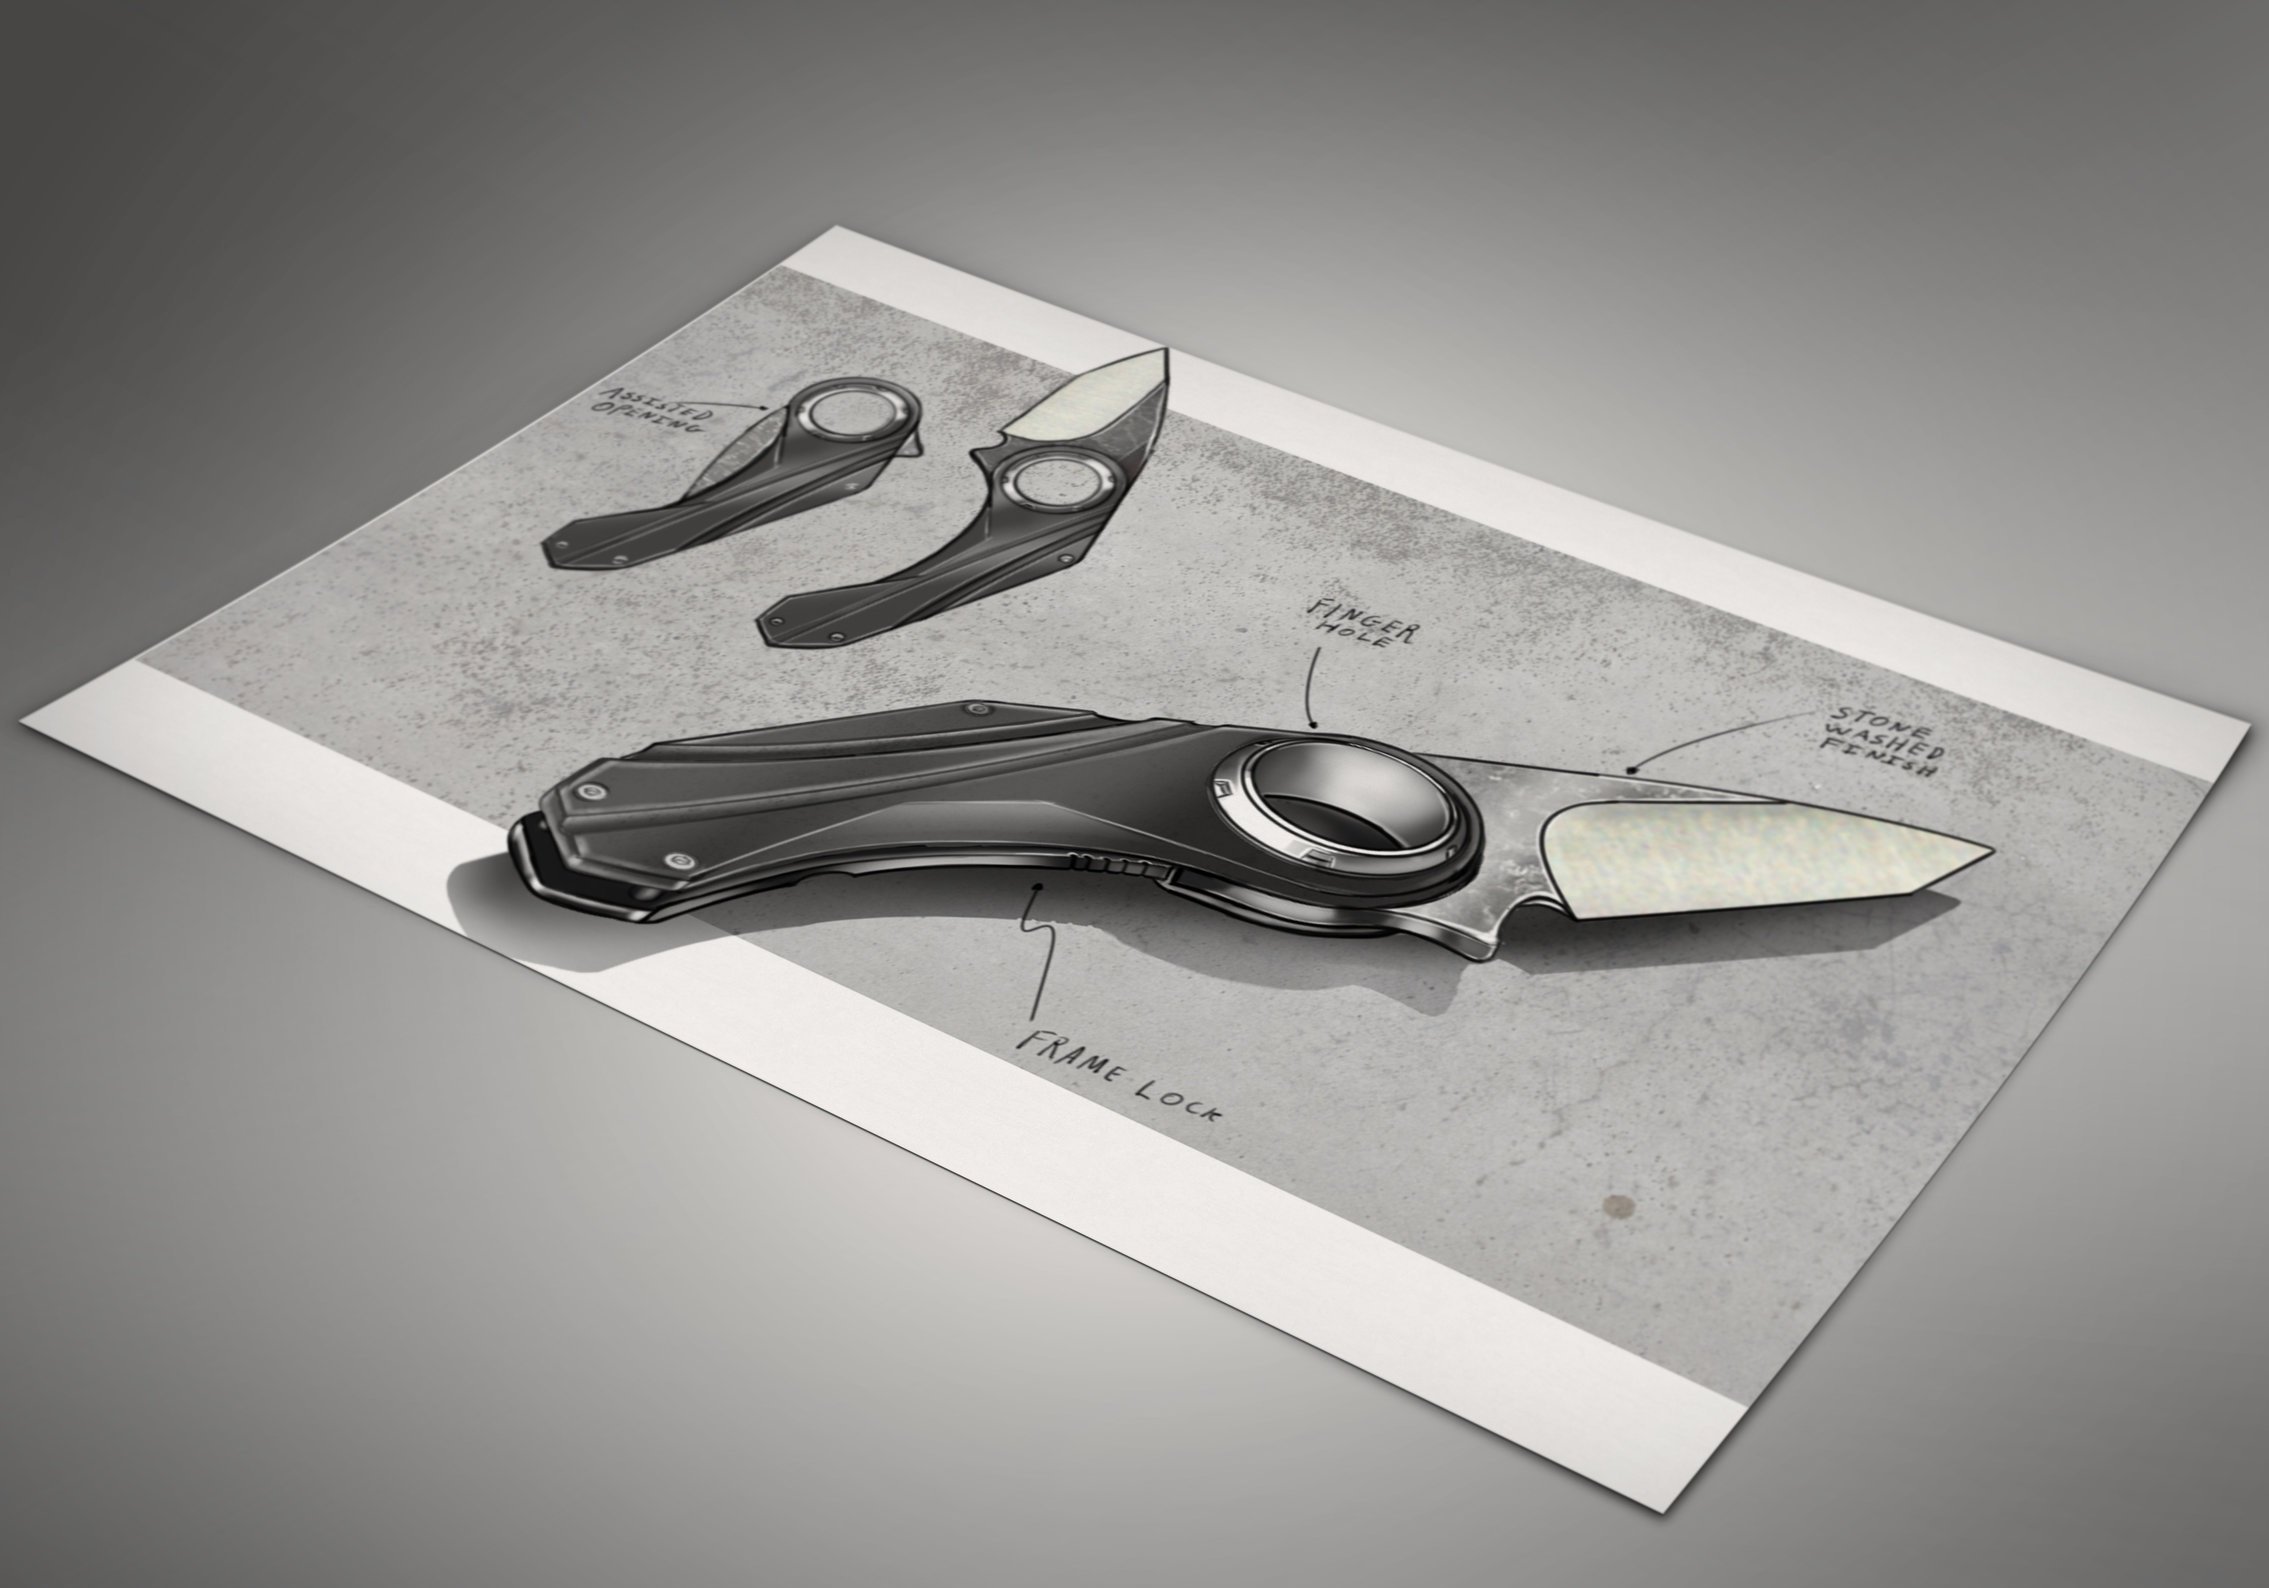 Urban+knife+paper.jpg